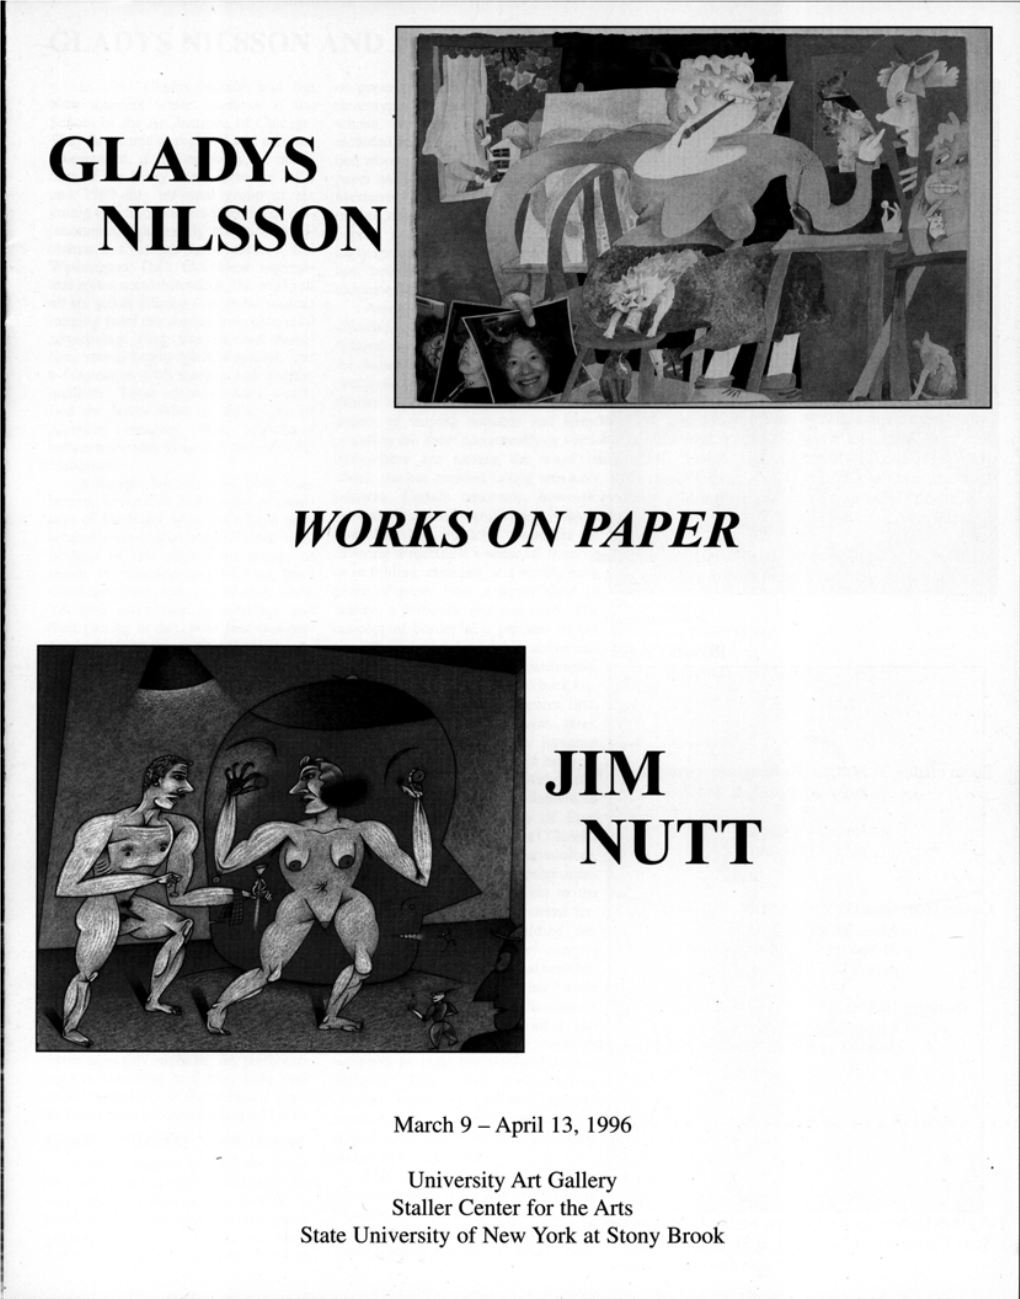 Gladys Nilsson and Jim Nutt